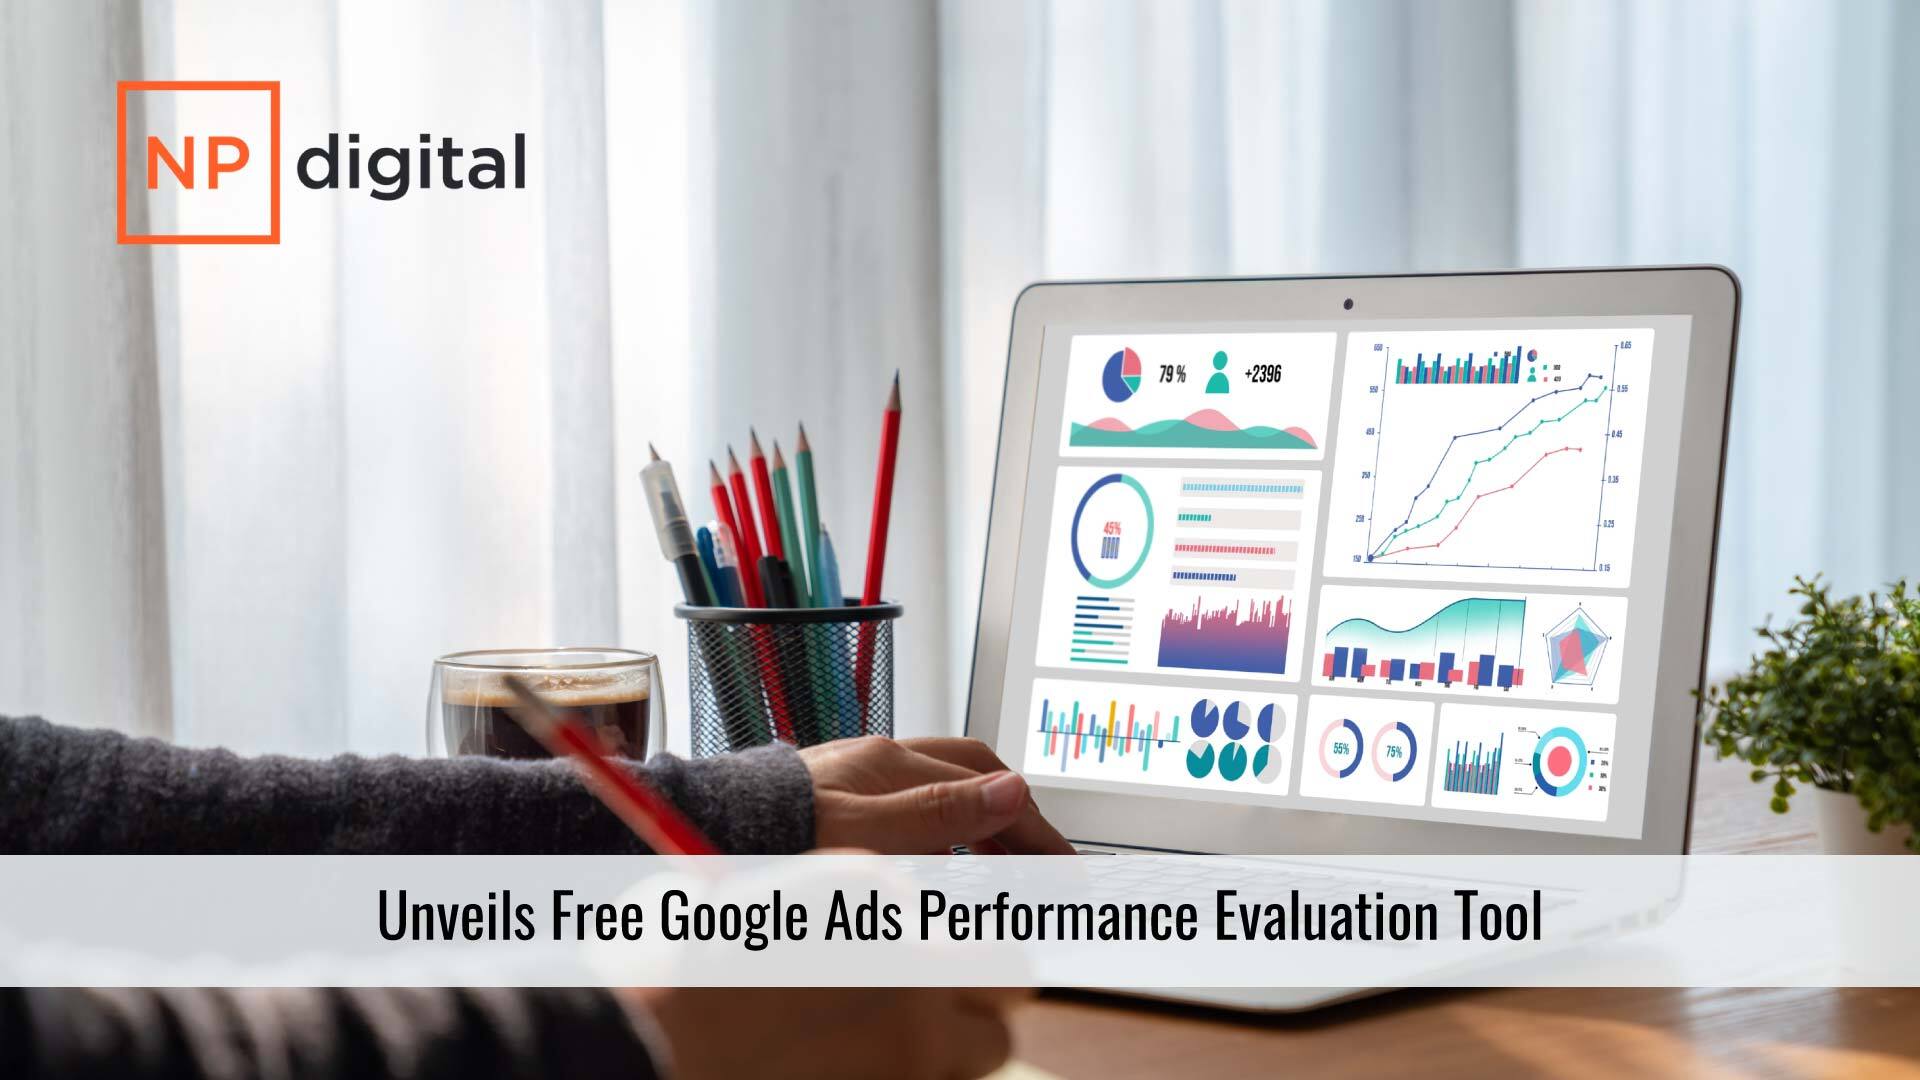 NP Digital Unveils Free Google Ads Performance Evaluation Tool